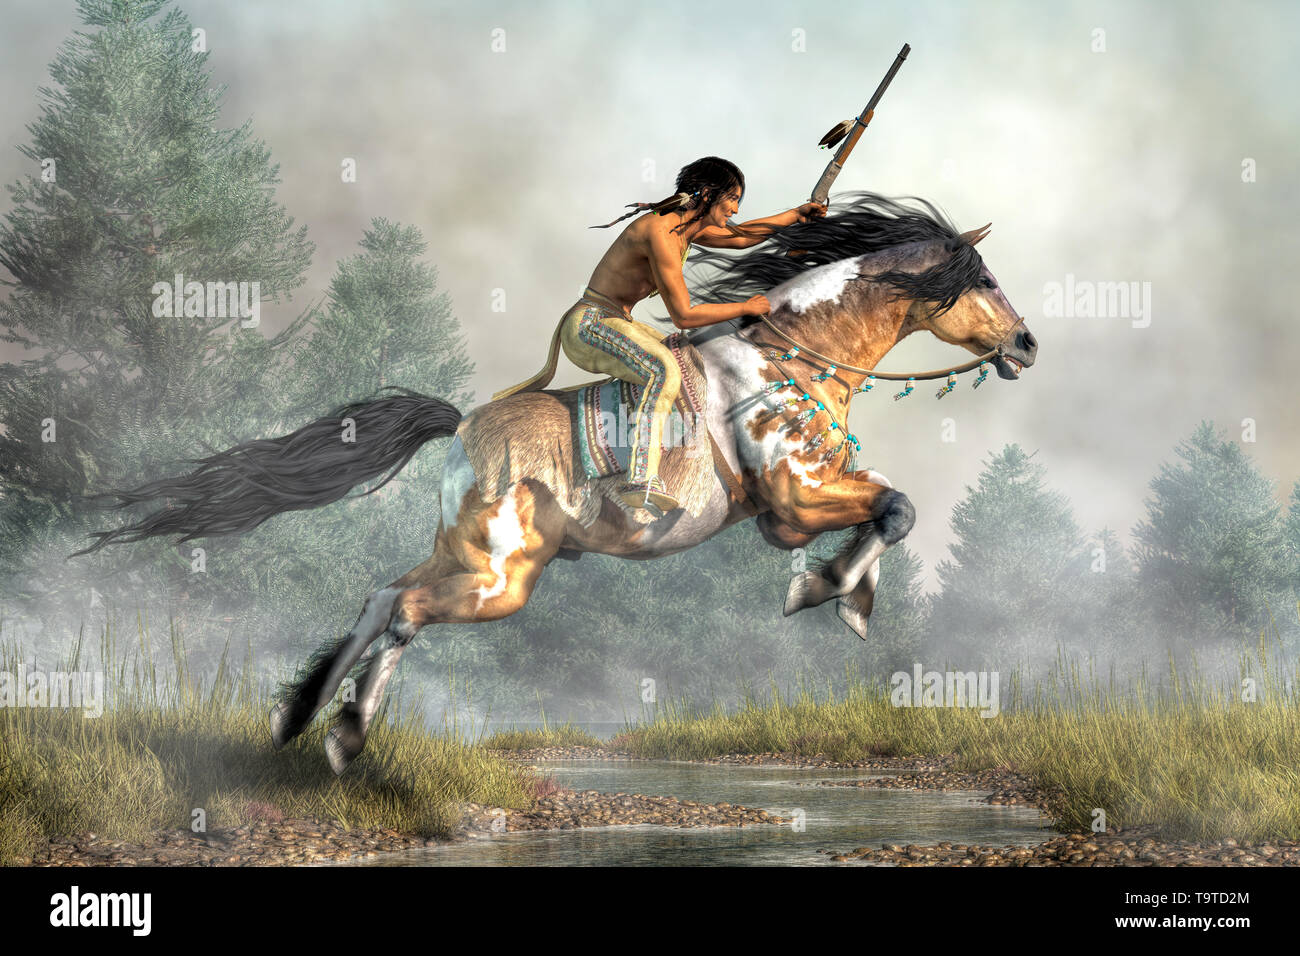 Horse horseback plains indian hi-res stock photography and images - Alamy